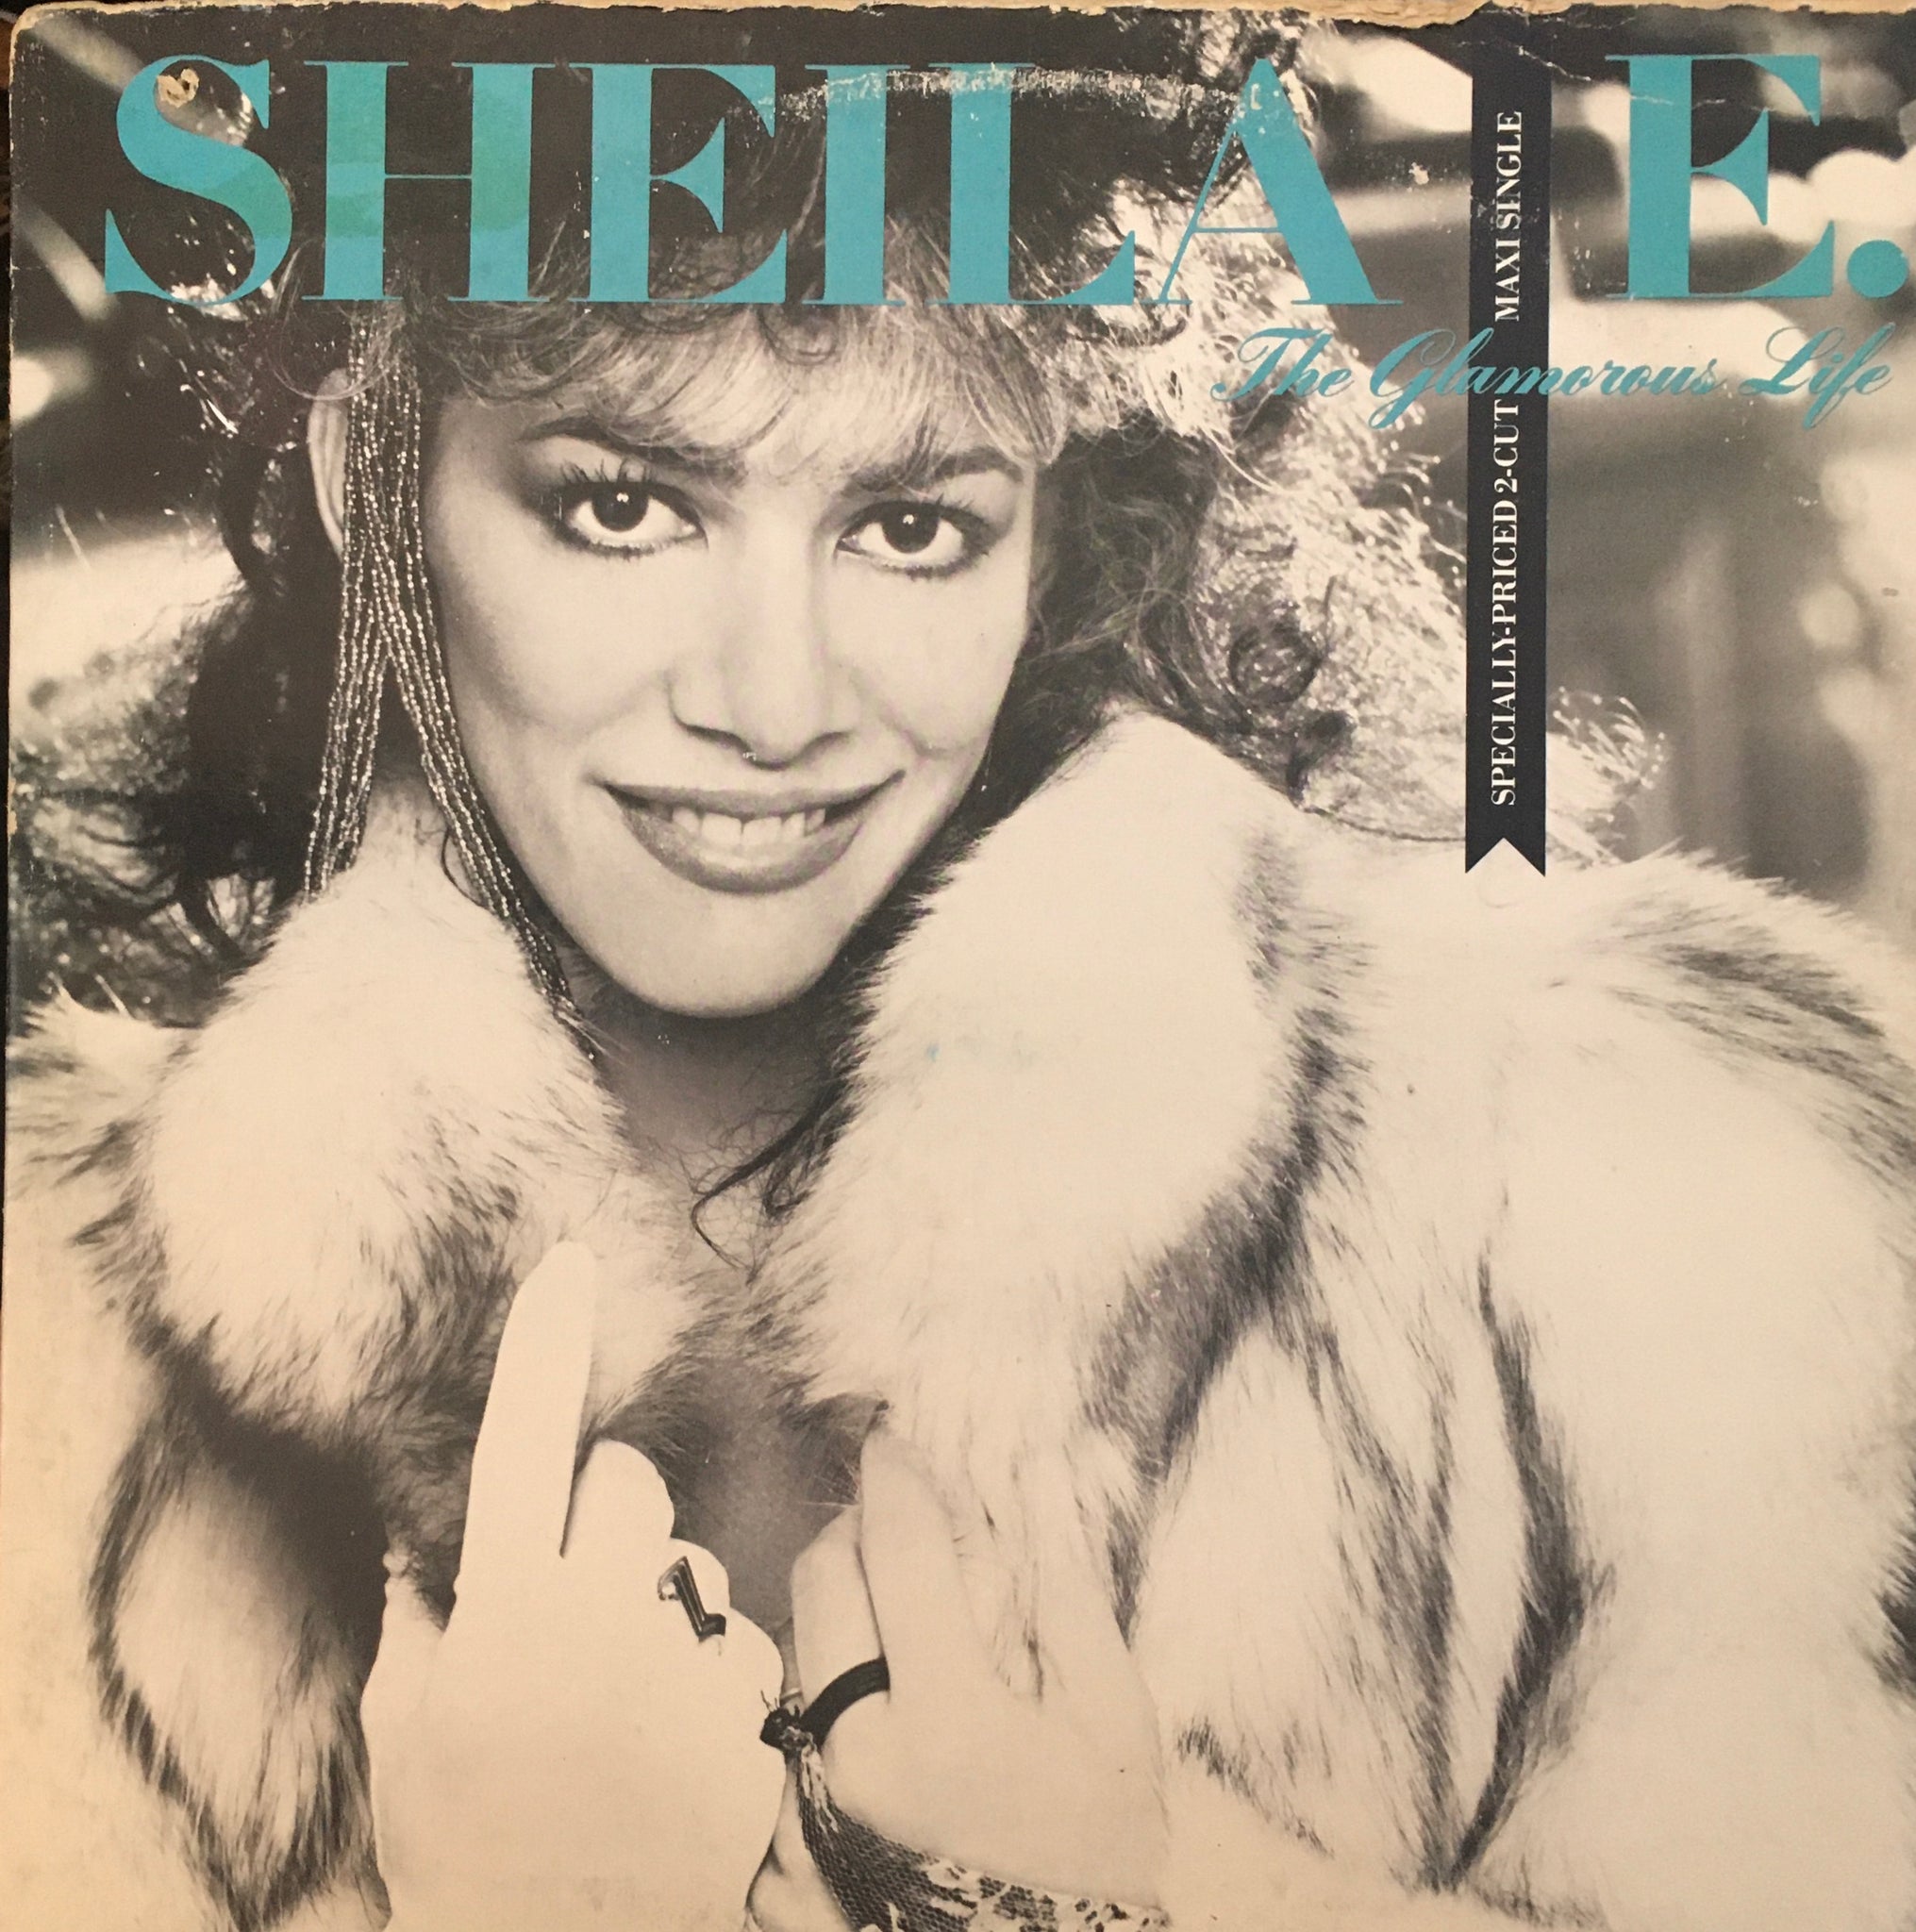 Sheila E. "The Glamorous Life" Single (1984)